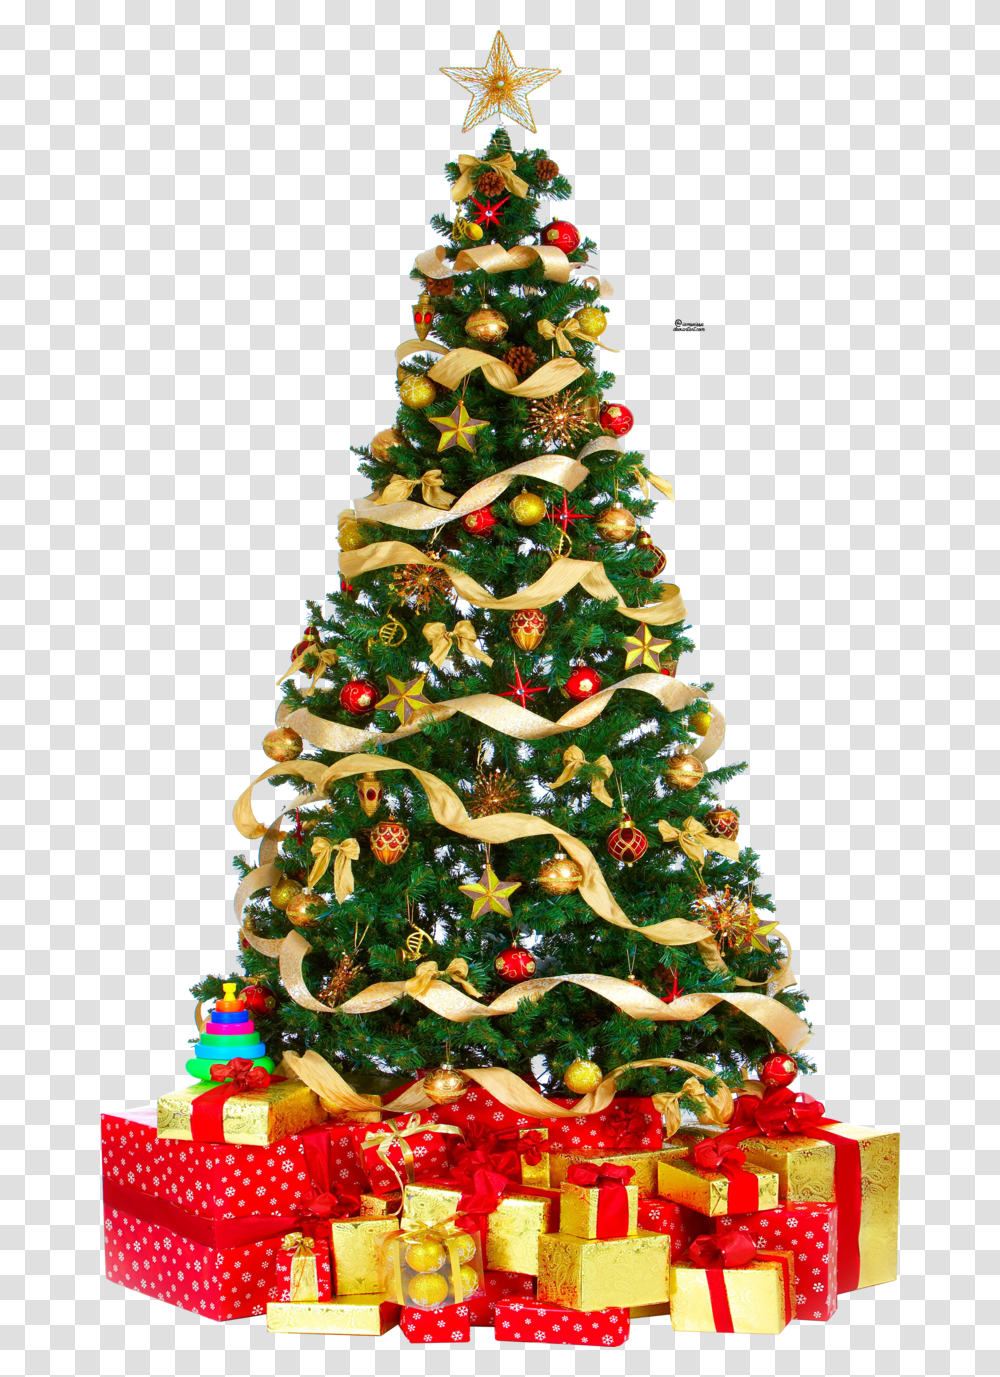 Christmas Tree Free Download Christmas Tree Download, Plant, Ornament, Vegetation, Bush Transparent Png